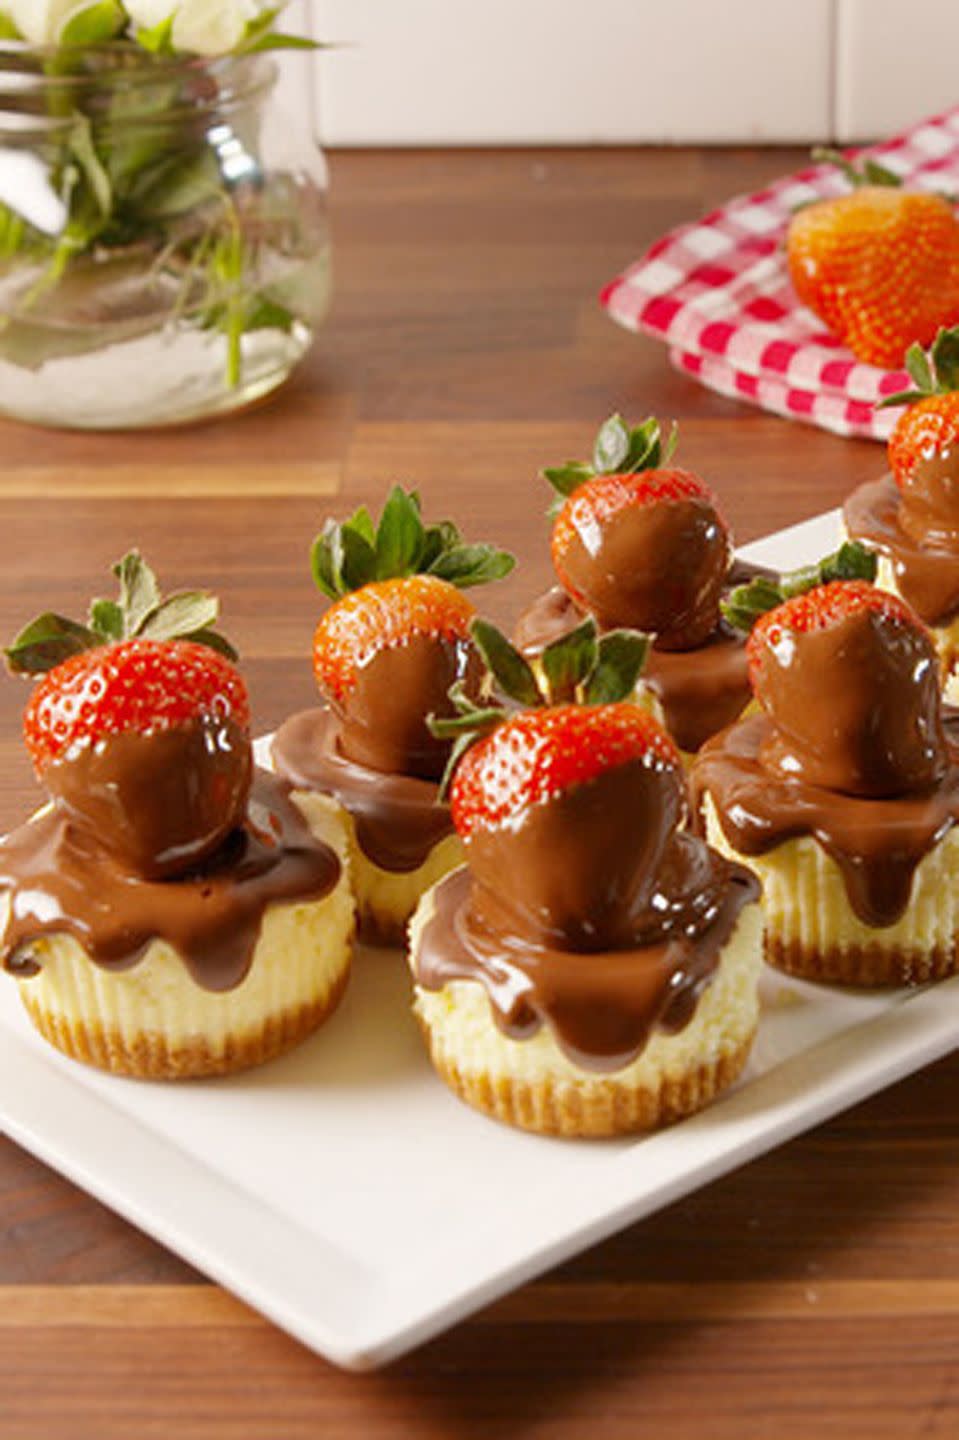 Chocolate Strawberry Cheesecakes